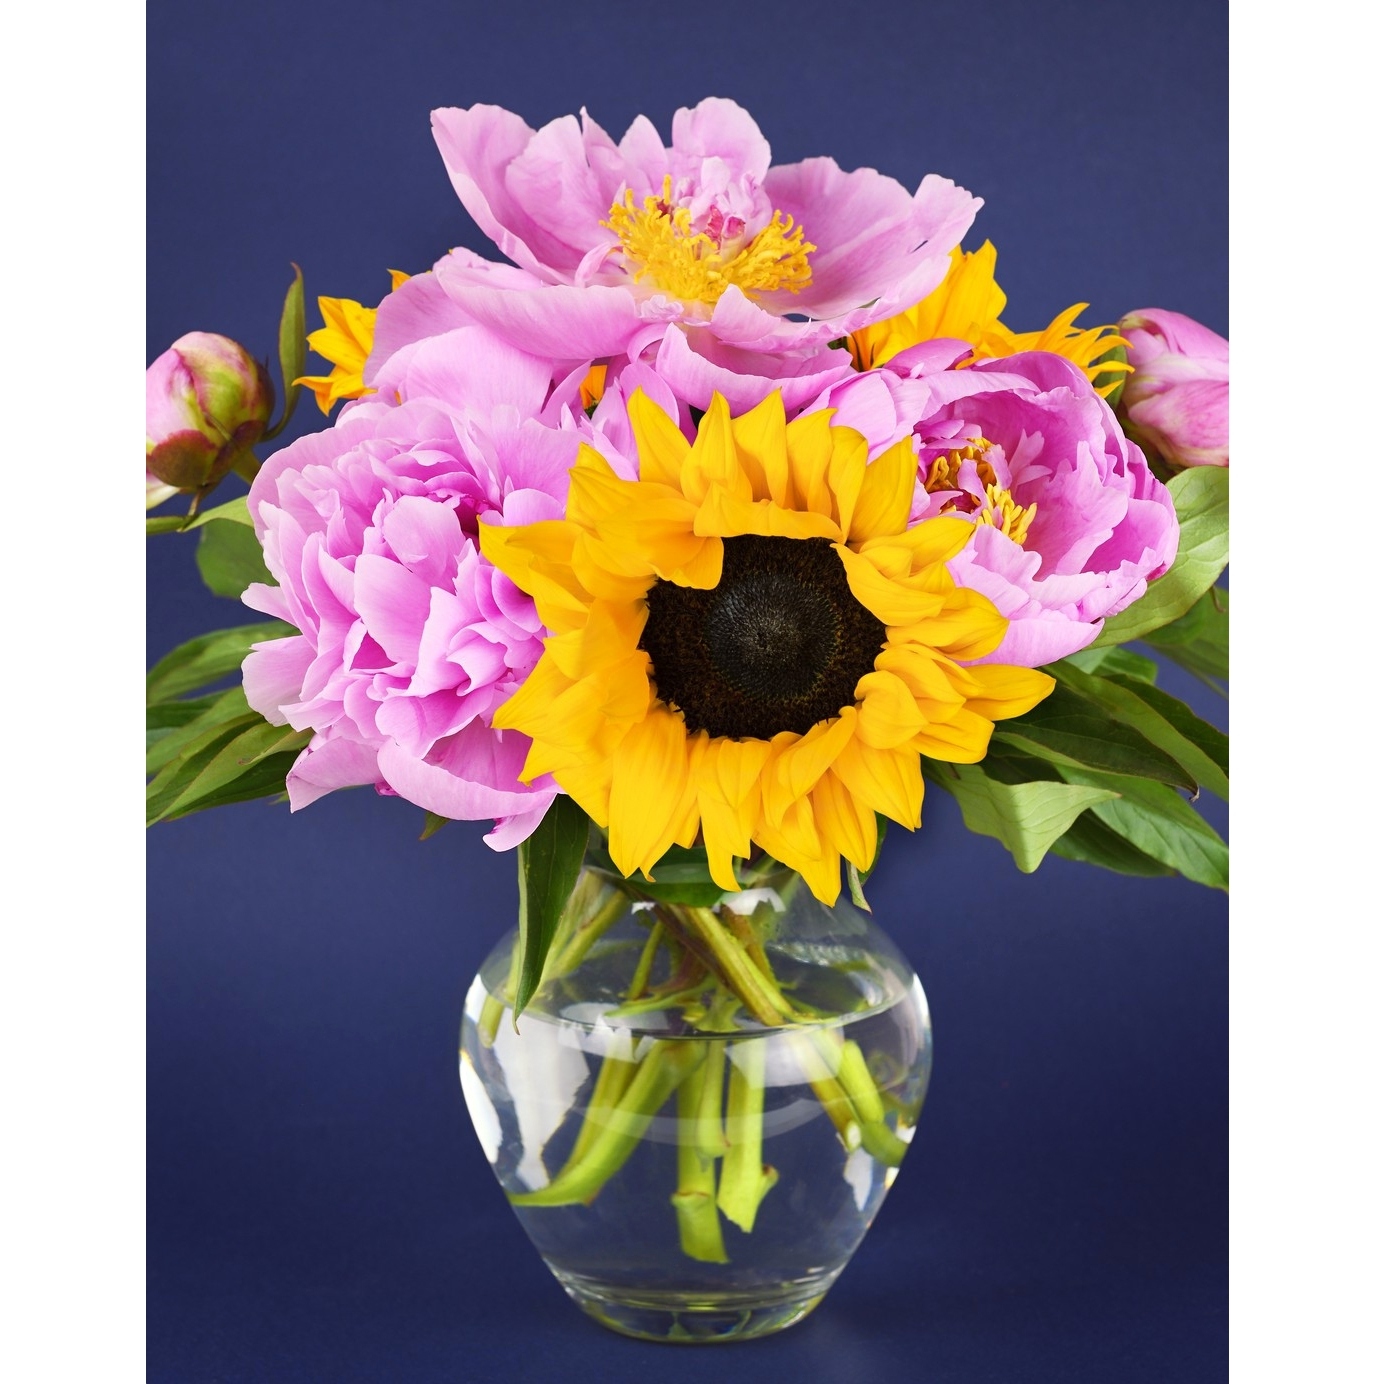 Картина по номерам "Цветы в вазе на синем фоне" (13 цветов, 17х22 см)